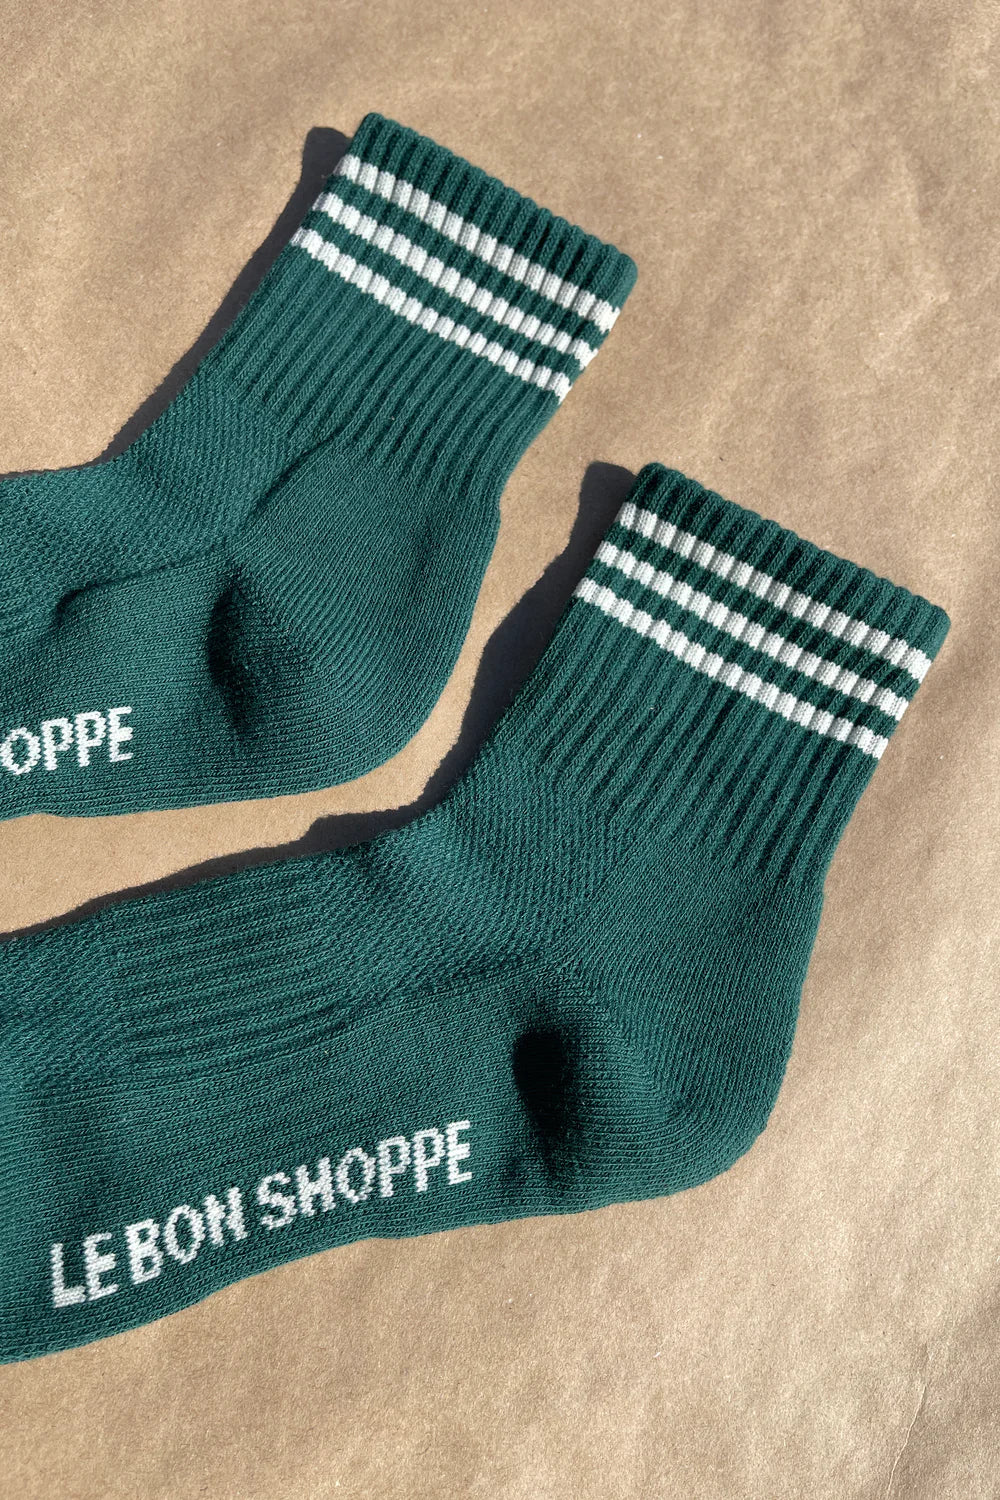 Le Bon Shoppe Girlfriend Hunter Green Socks - The Mercantile London